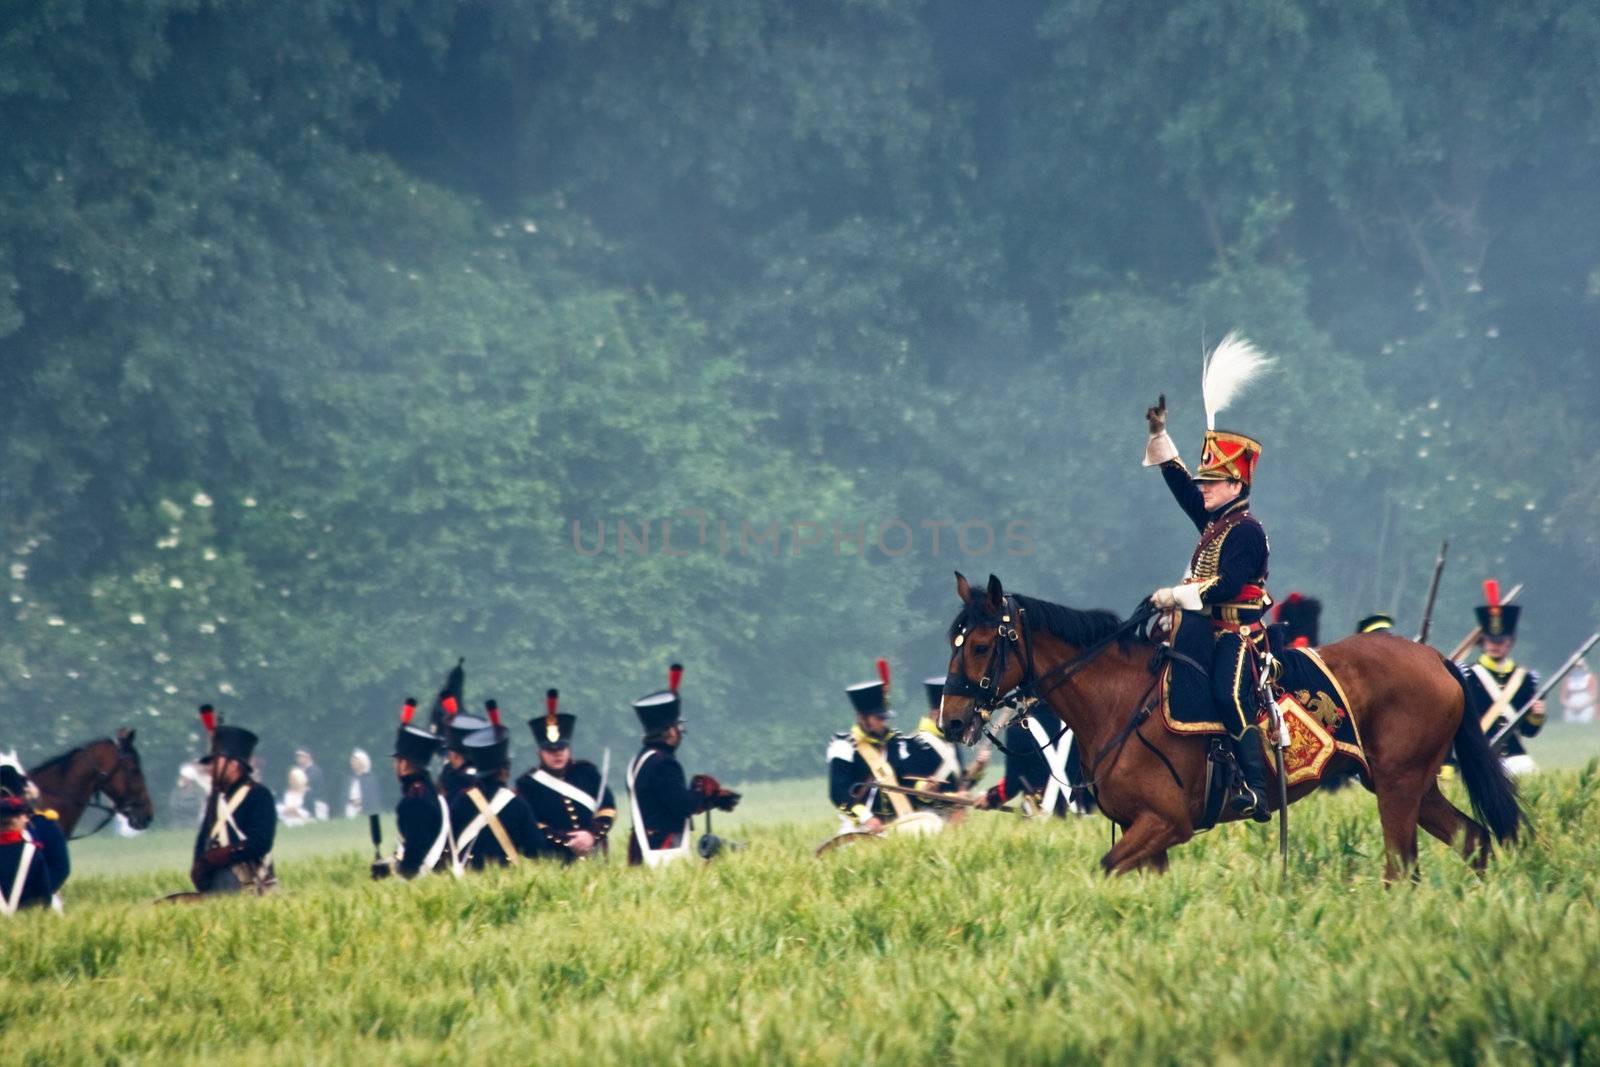 Re-enactment Battle of Waterloo, Belgium 2009 by Colette